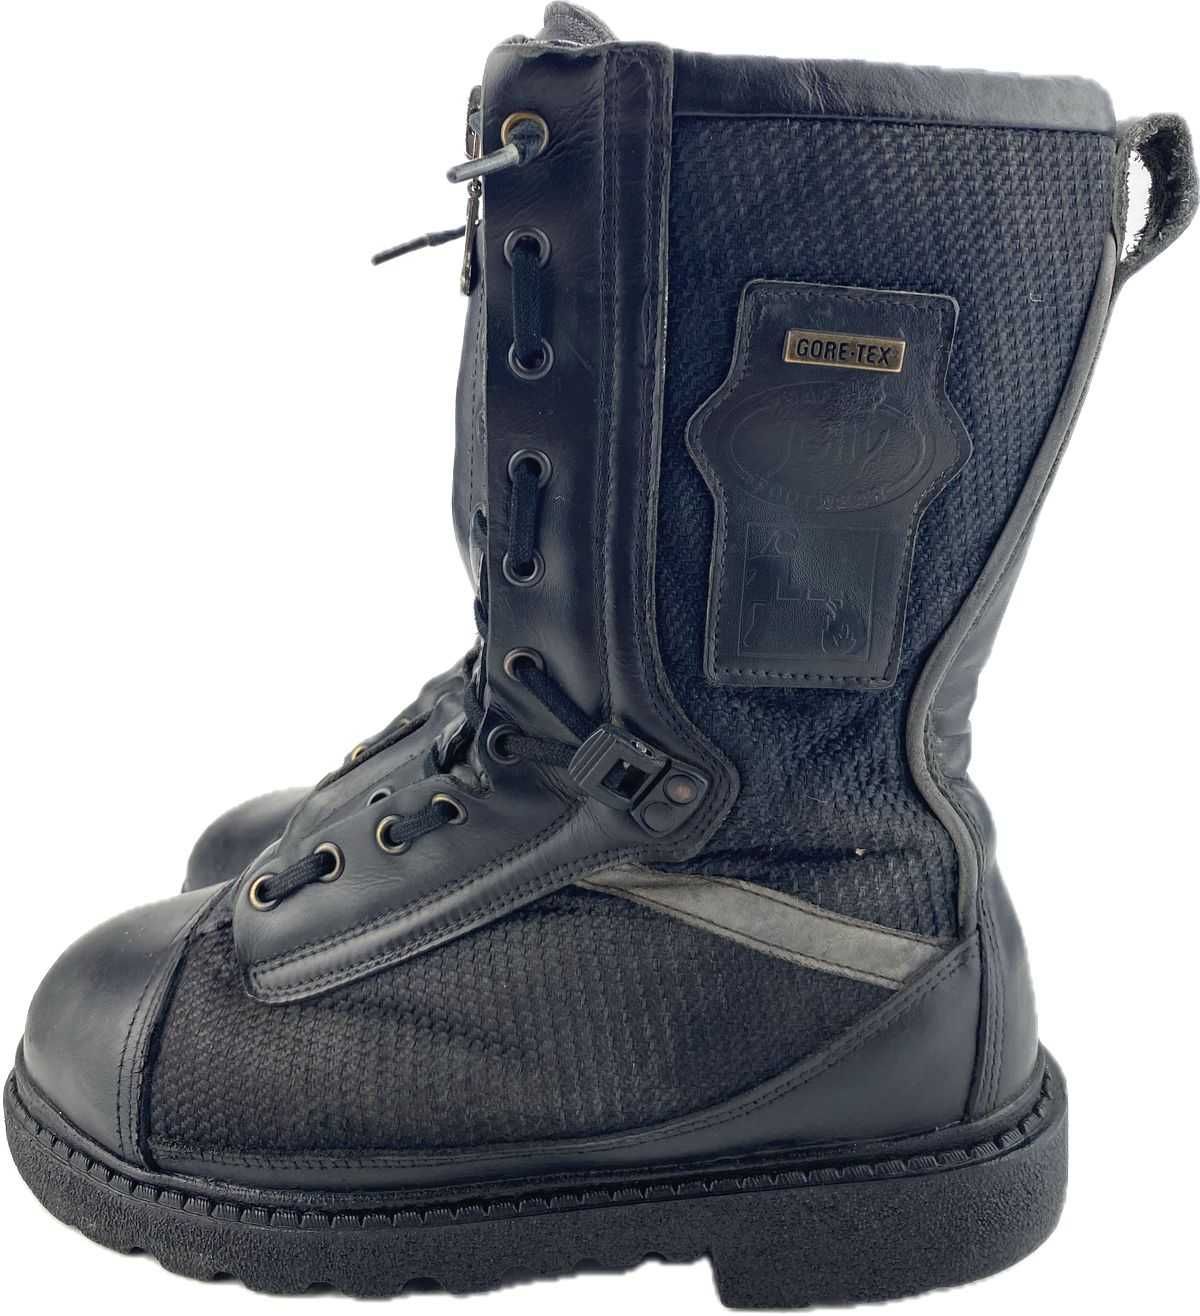 Buty strażackie JOLLY SAFETY Footwear r. 41